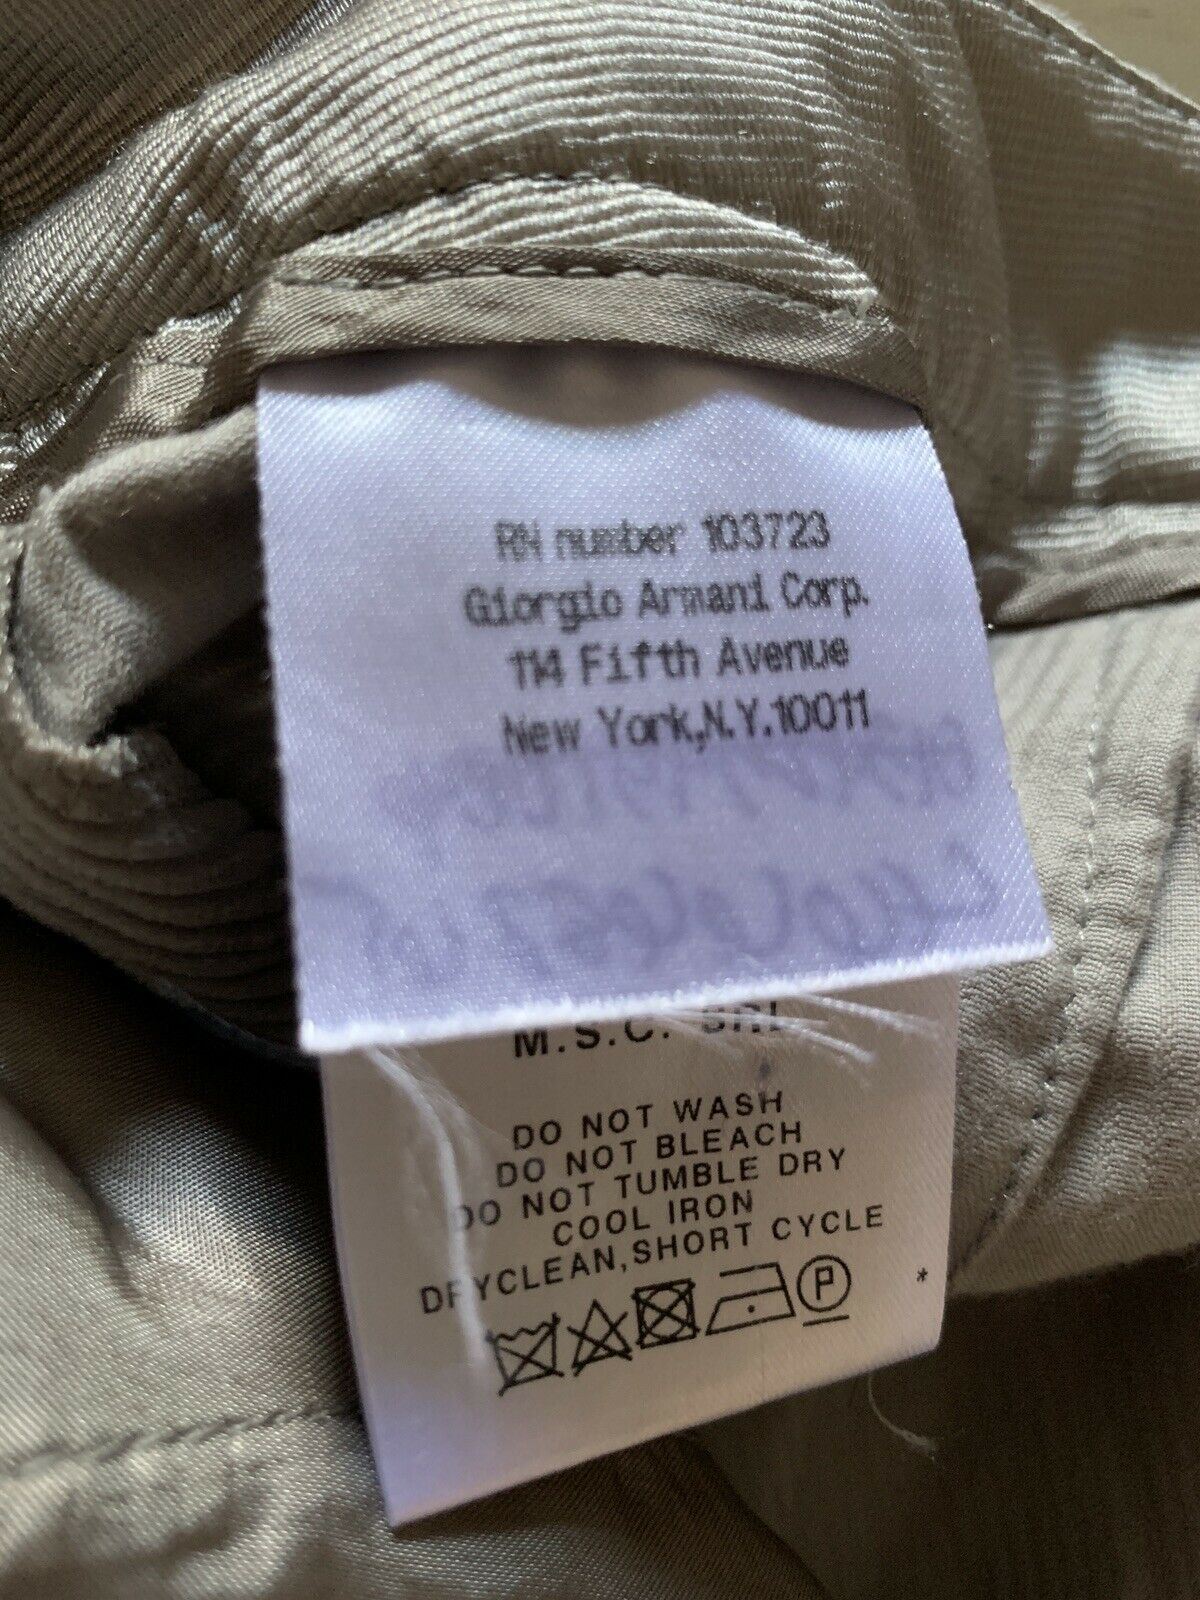 New $795 Giorgio Armani Women's Velvet Pants Gray 48 Eu Made In Italy